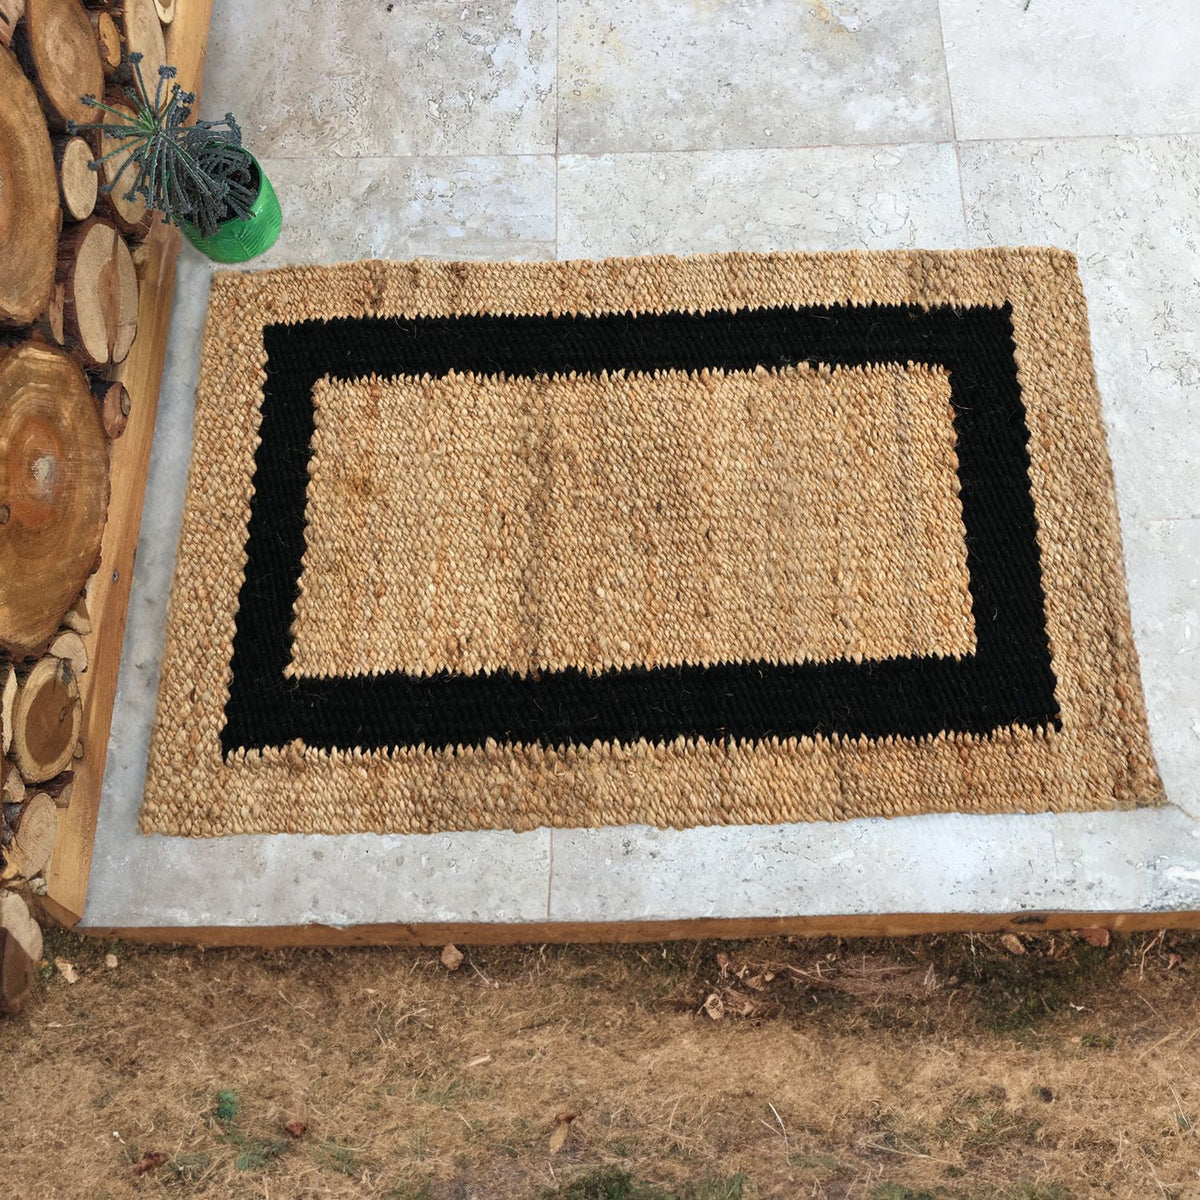 Border of Bora - Artisan Luxe Rug - Black Border - Handwoven Jute Carpet - Organic Natural Sustainable